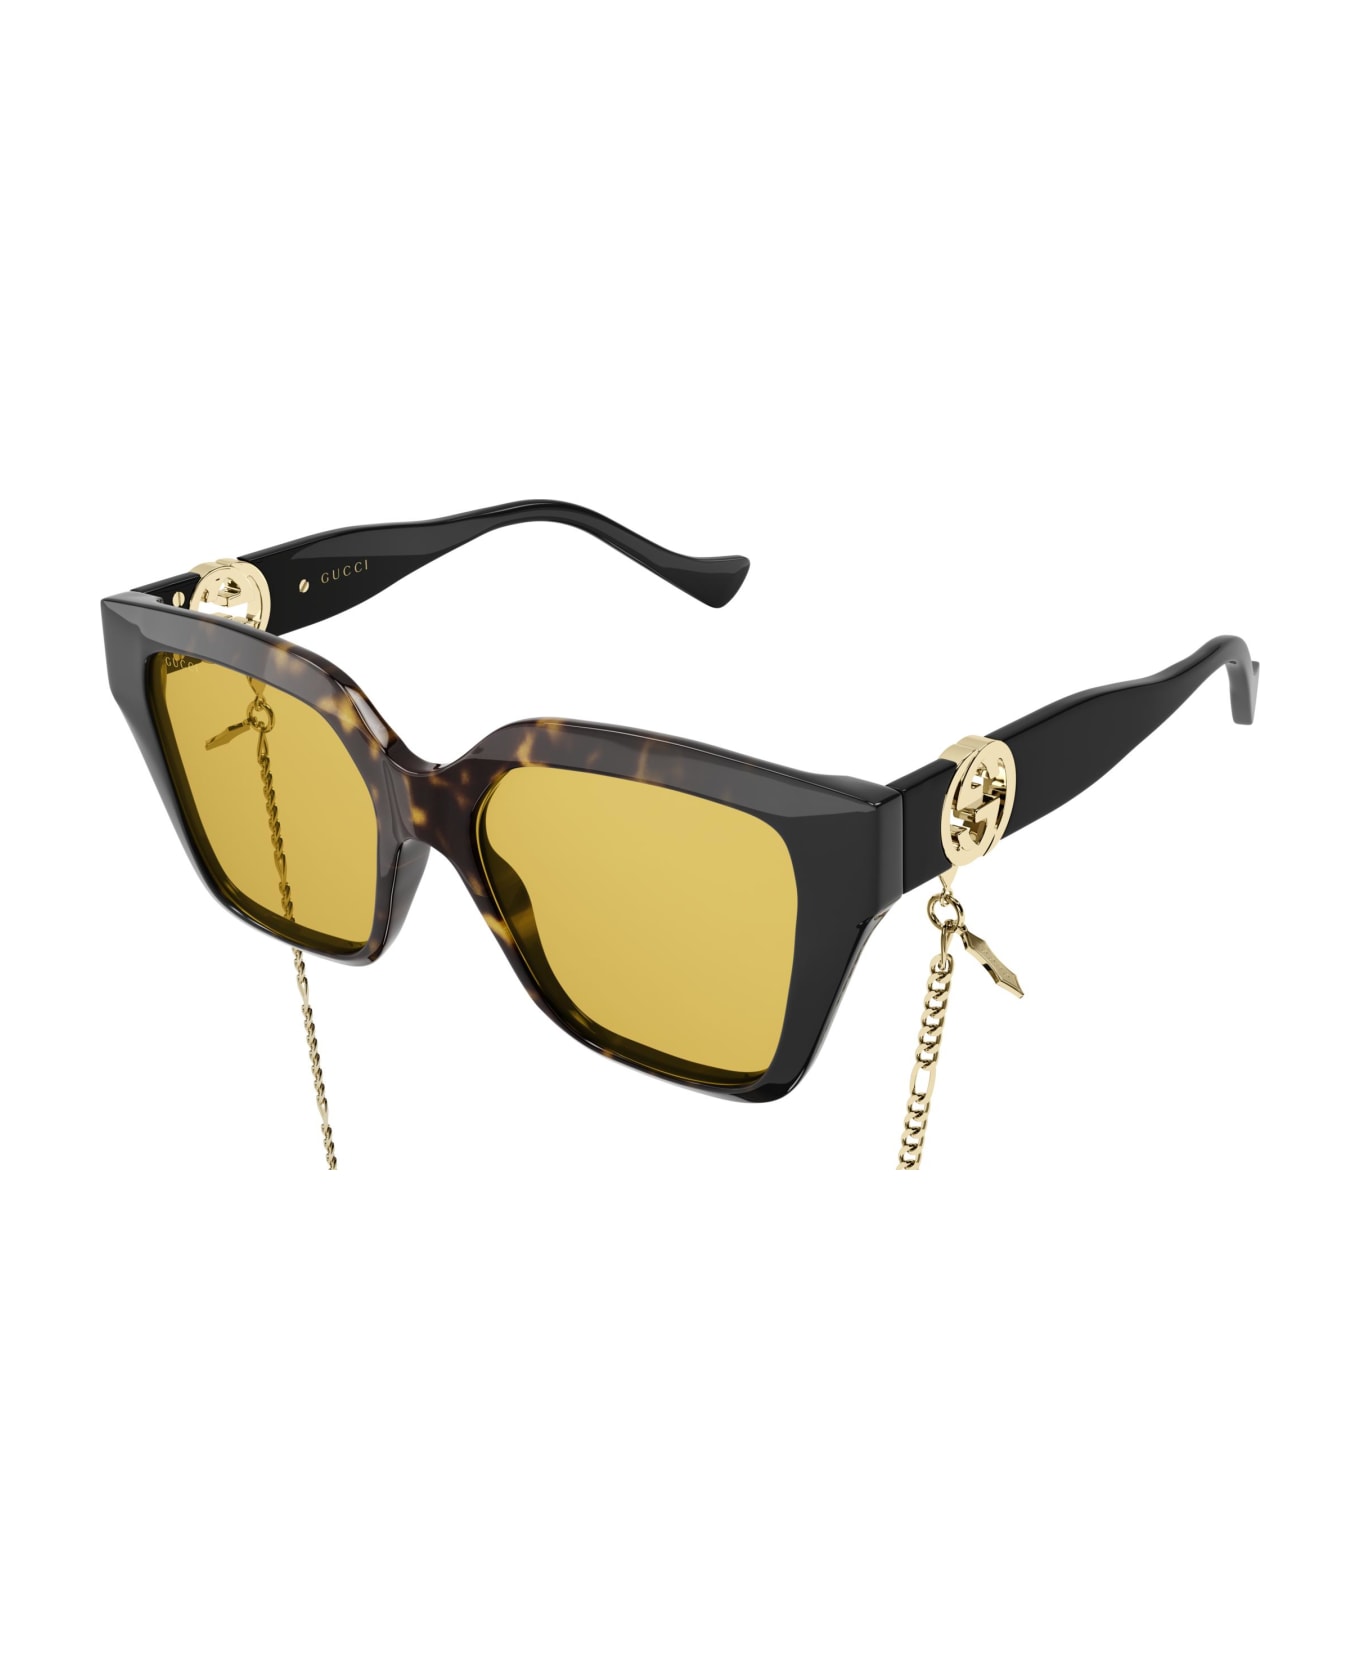 Gucci Eyewear GG1023S Eyewear - Havana Black Yellow